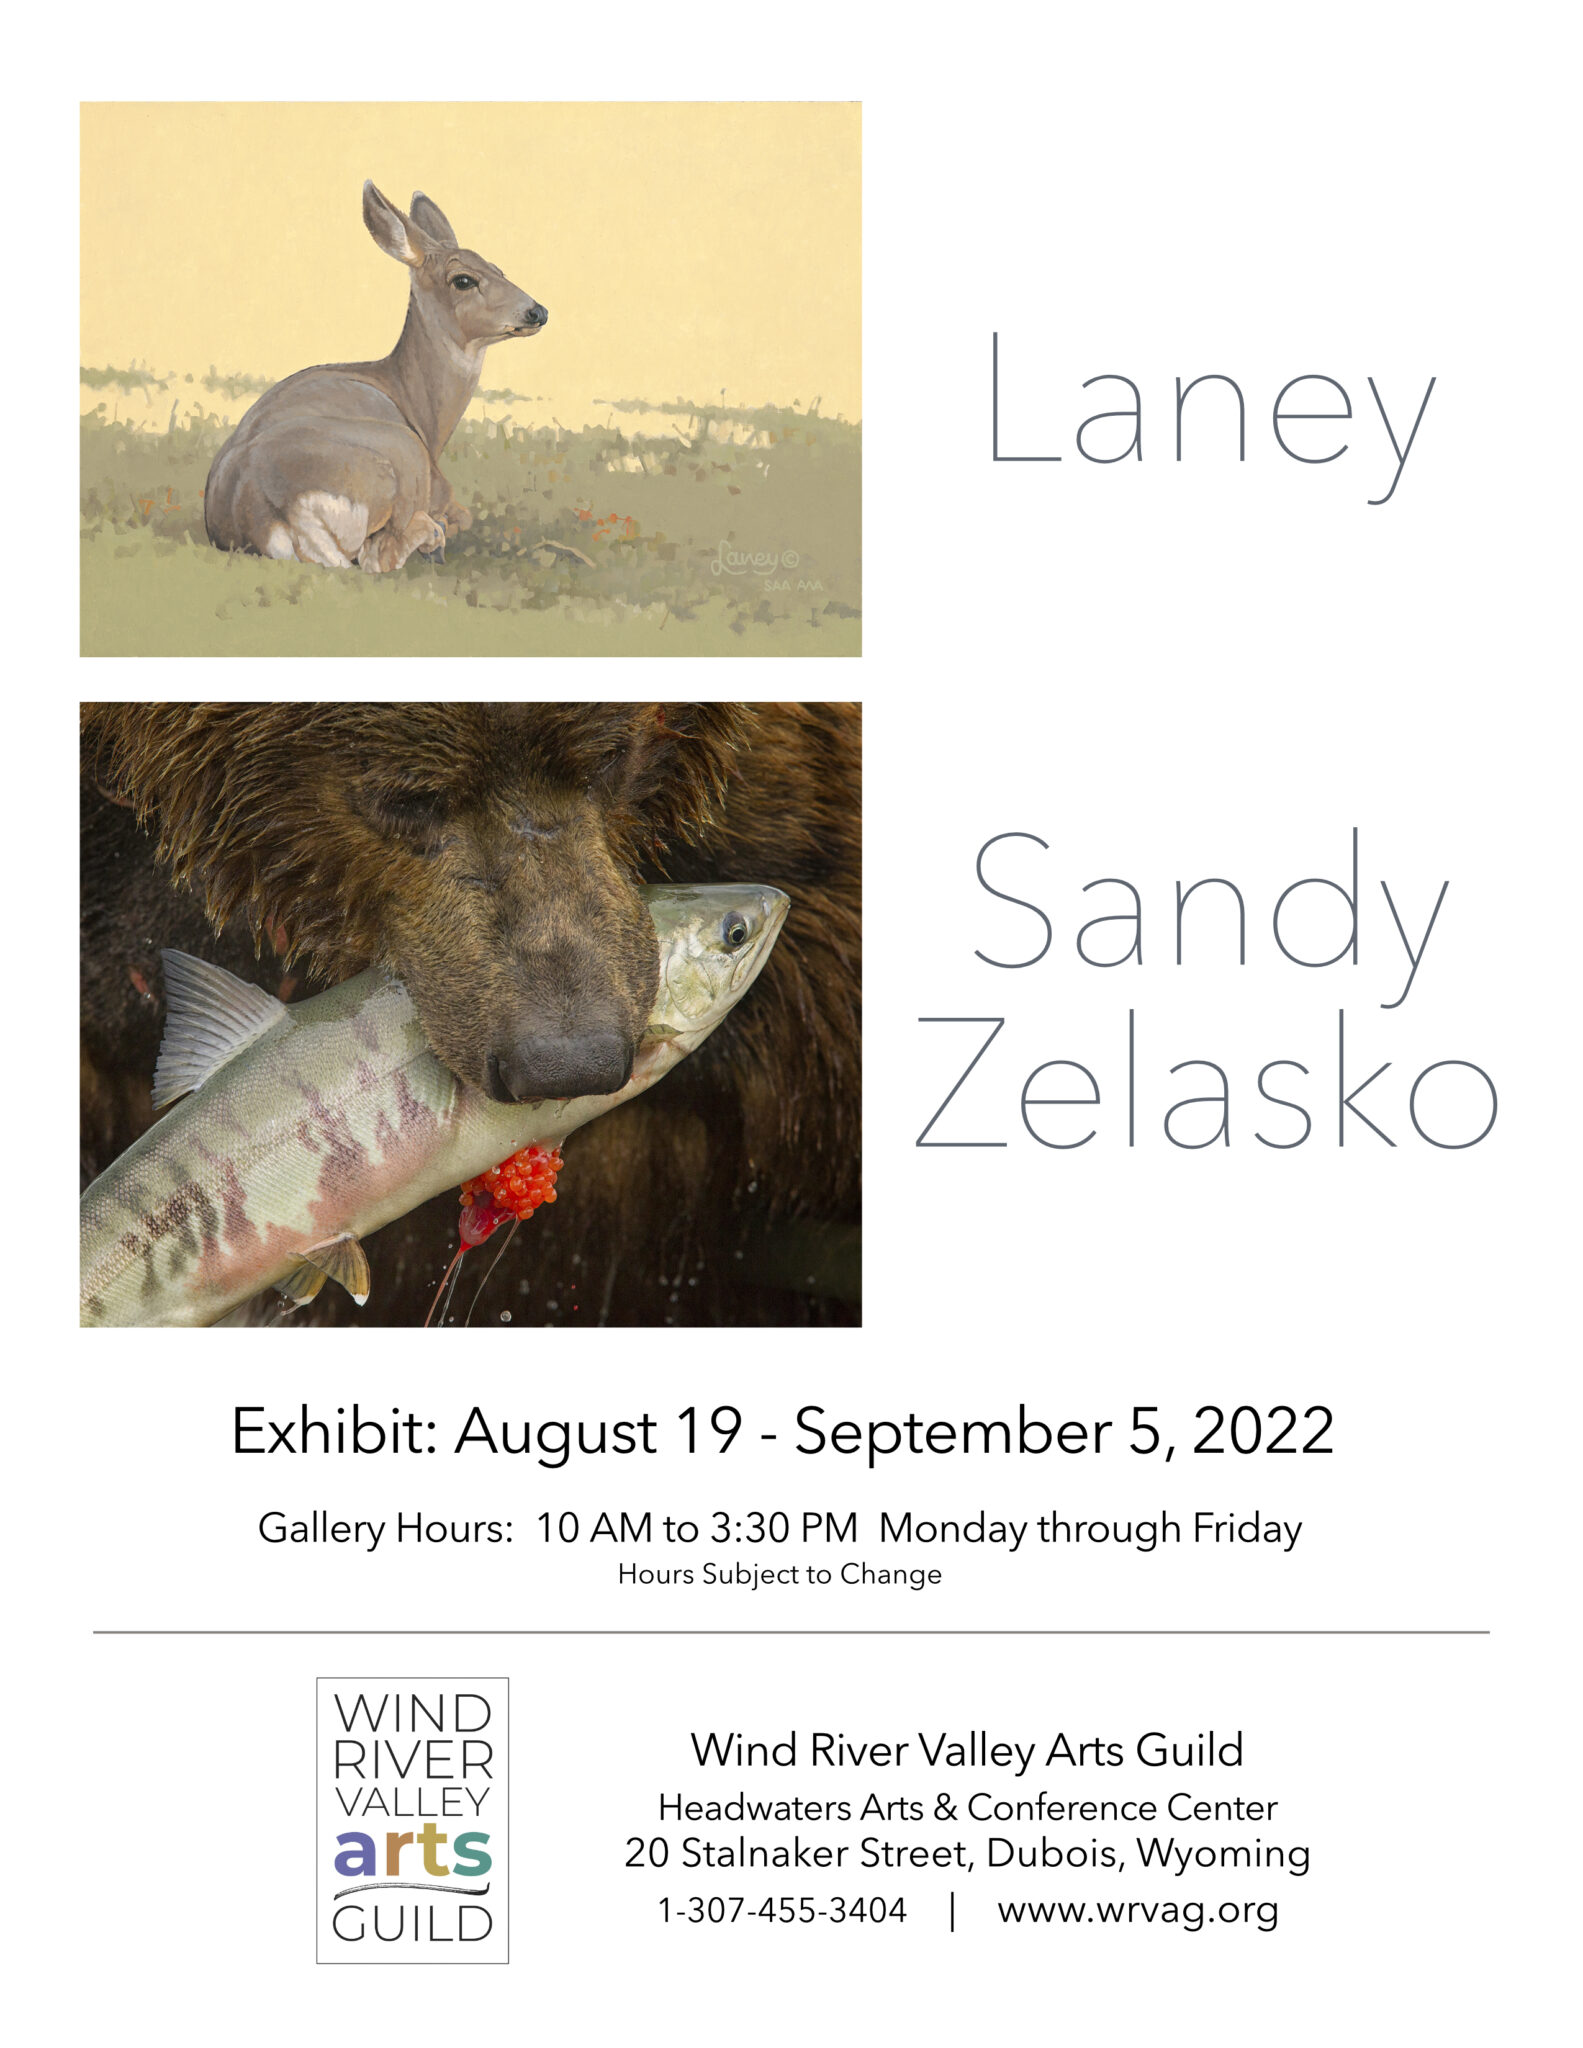 Wind River Valley Arts Guild Exhibition: Laney Hicks and Sandy Zelasko